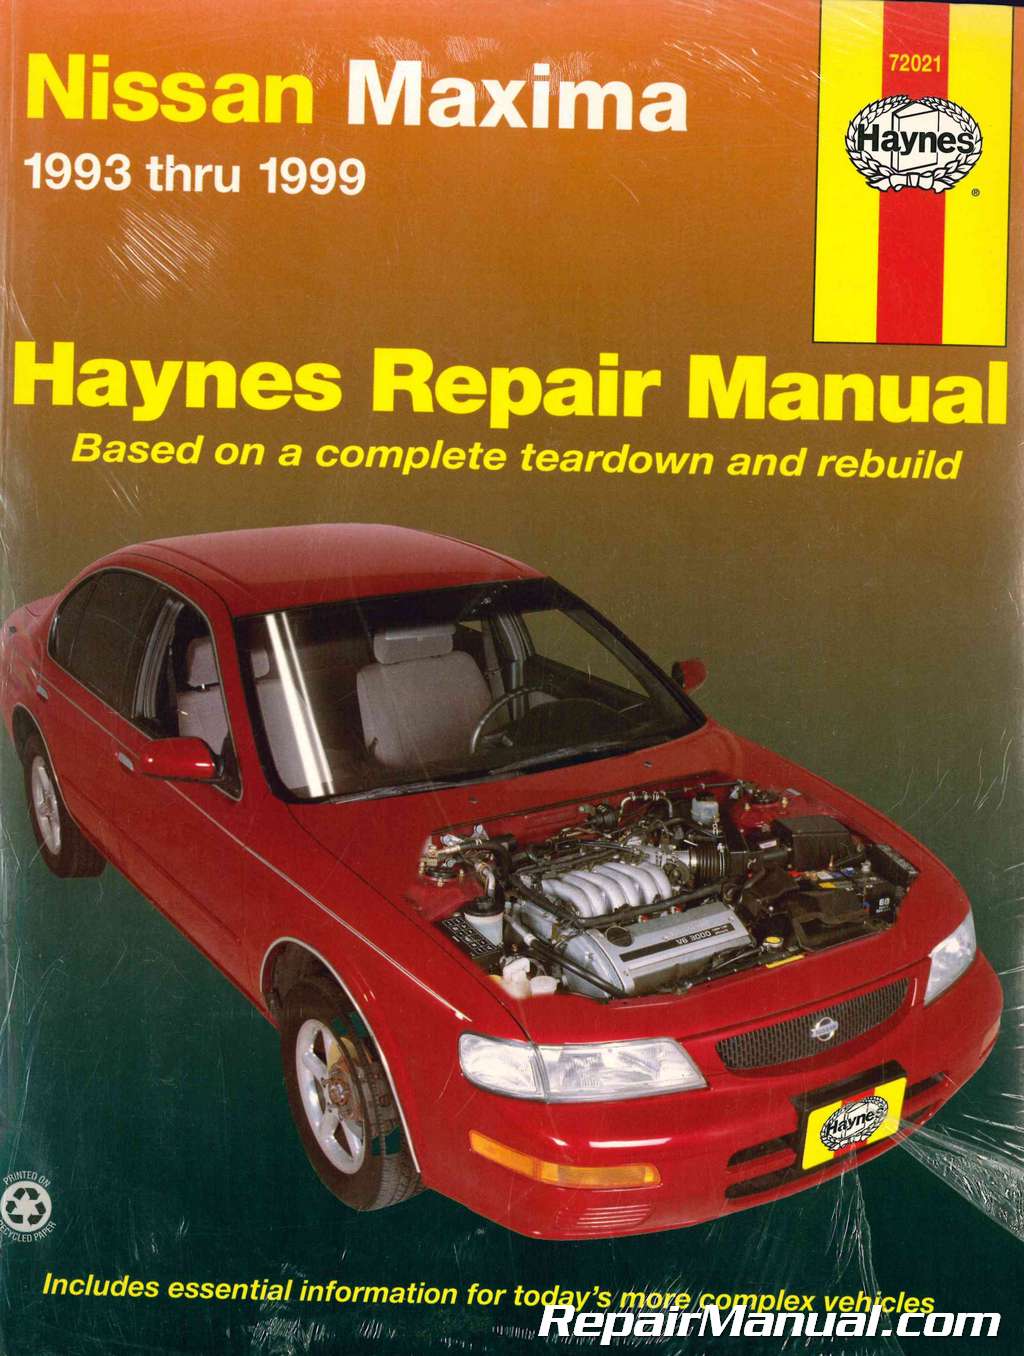 Nissan maxima repair manual